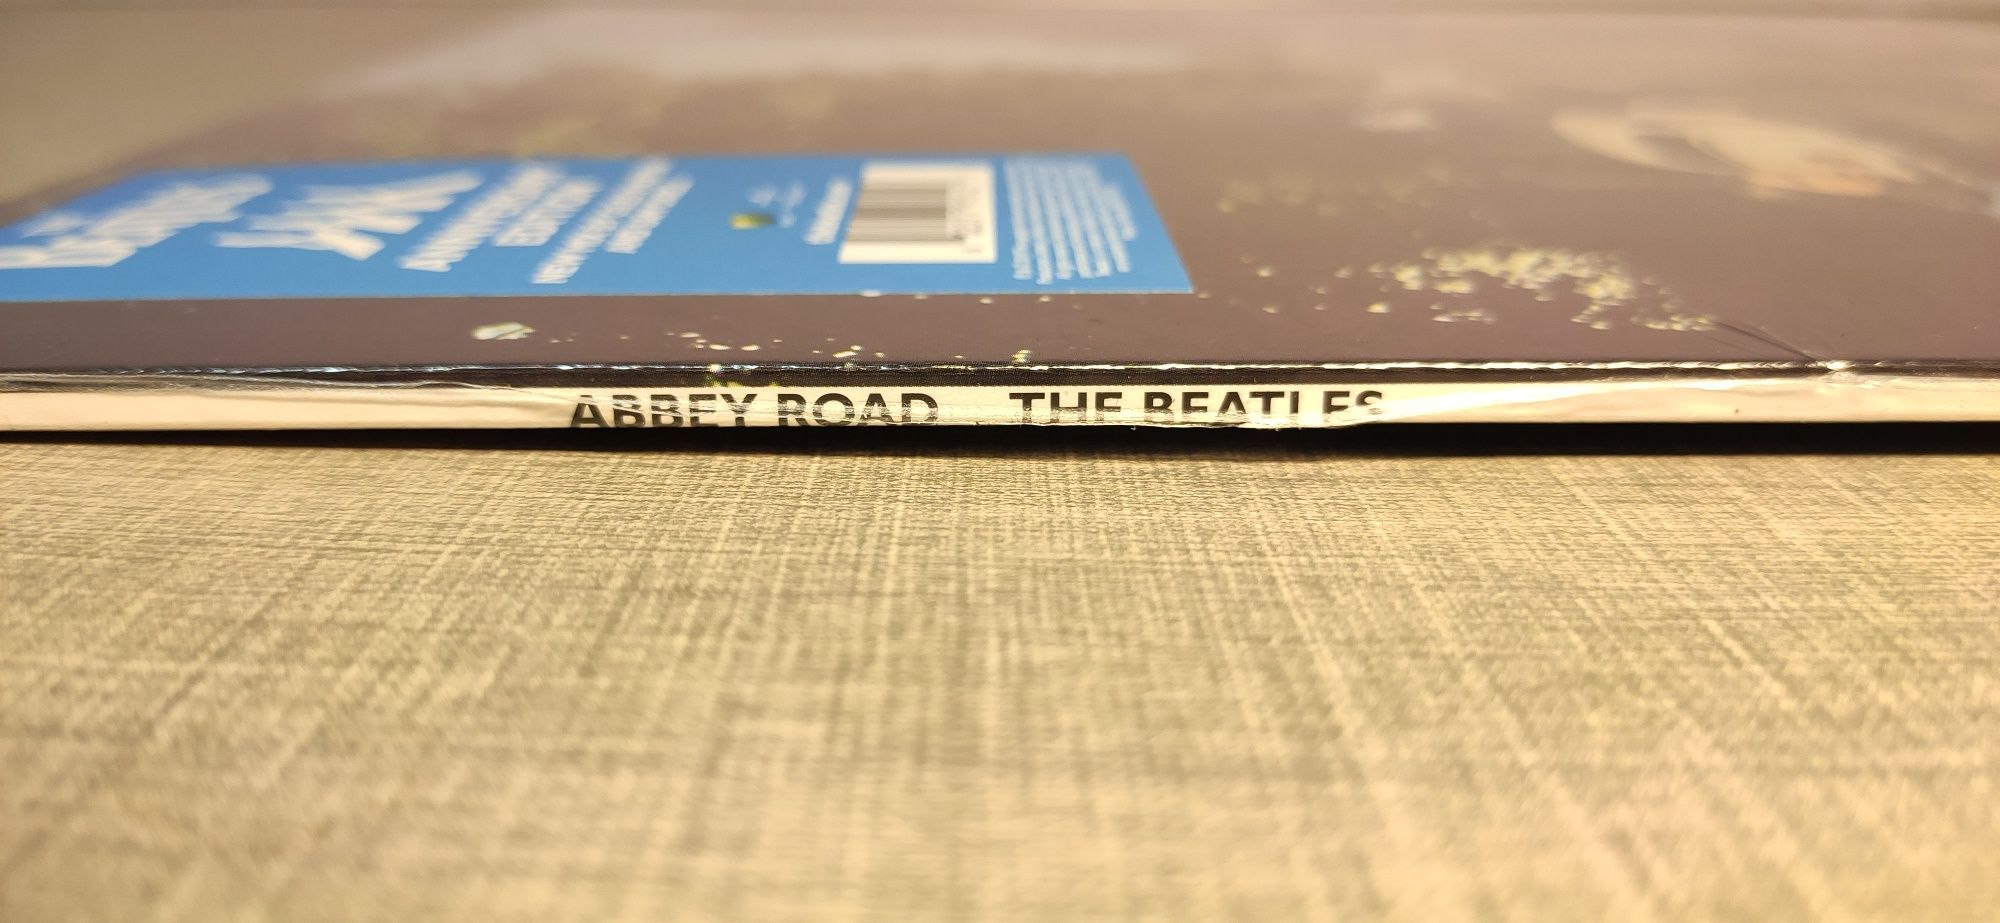 The Beatles : Abbey Road ANNIVERSARY EDITION 2019 LP / Винил Пластинка